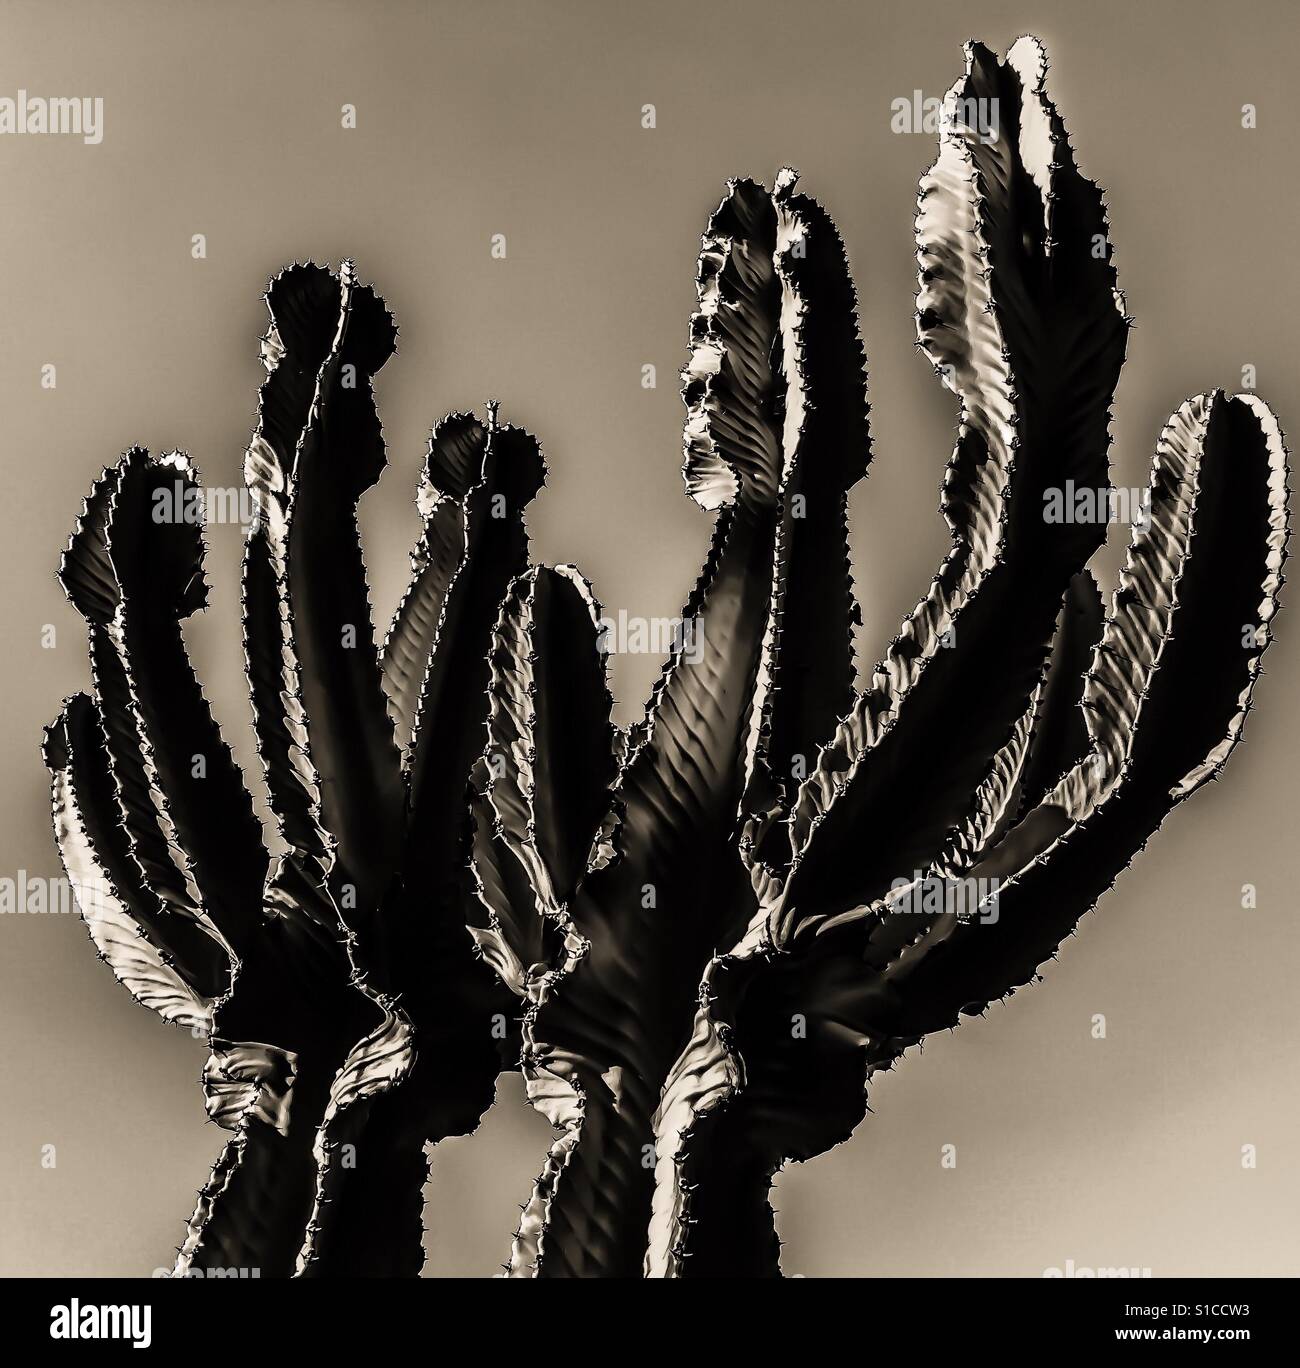 thorny-cacti-hands-S1CCW3.jpg